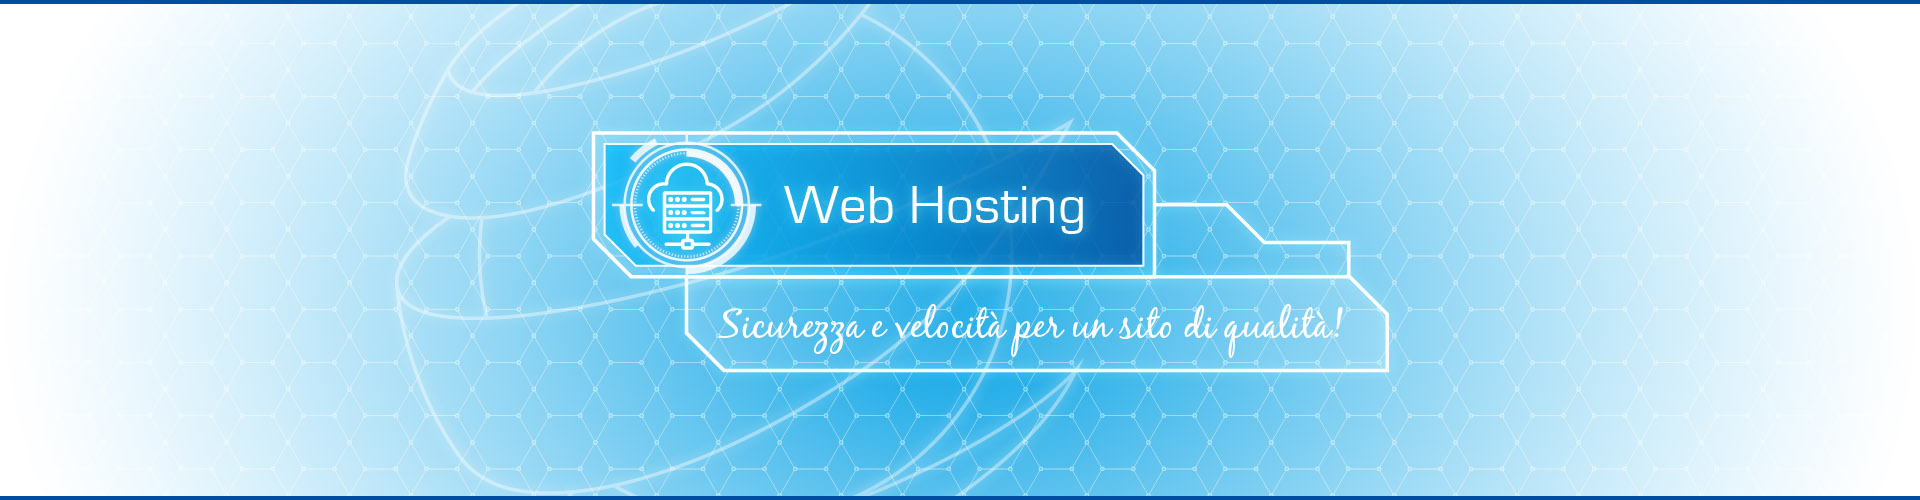 Web Hosting Professionale